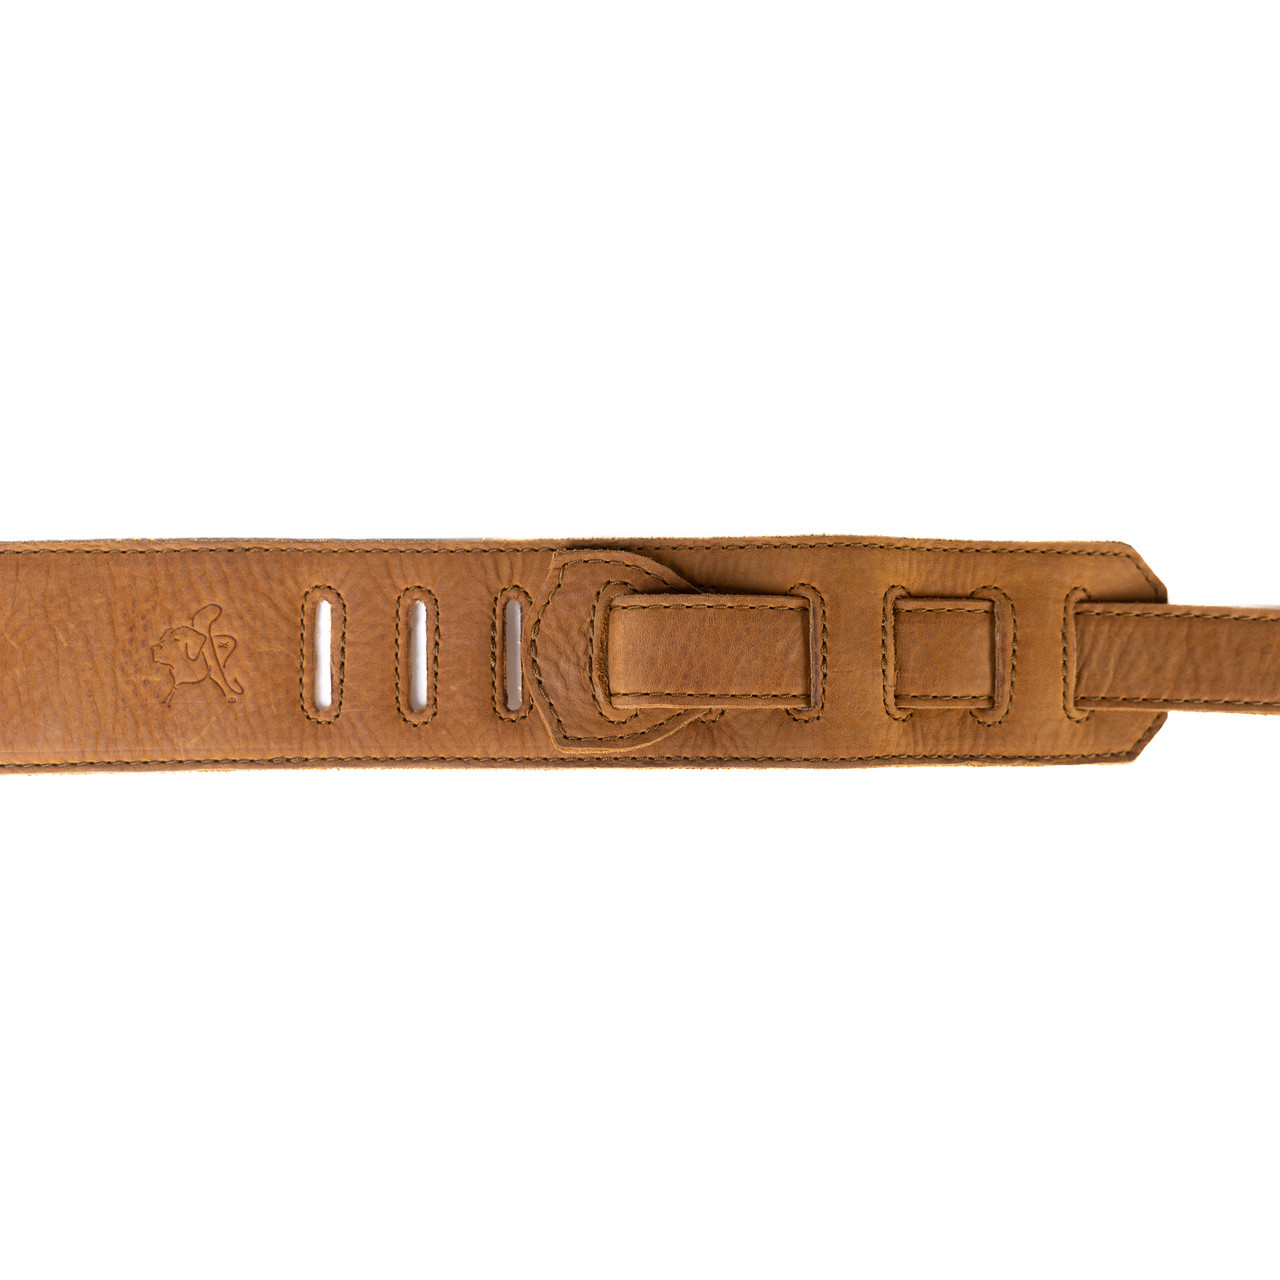 Dark brown suede messenger bag: 1 GUITAR strap + 1 suede strap